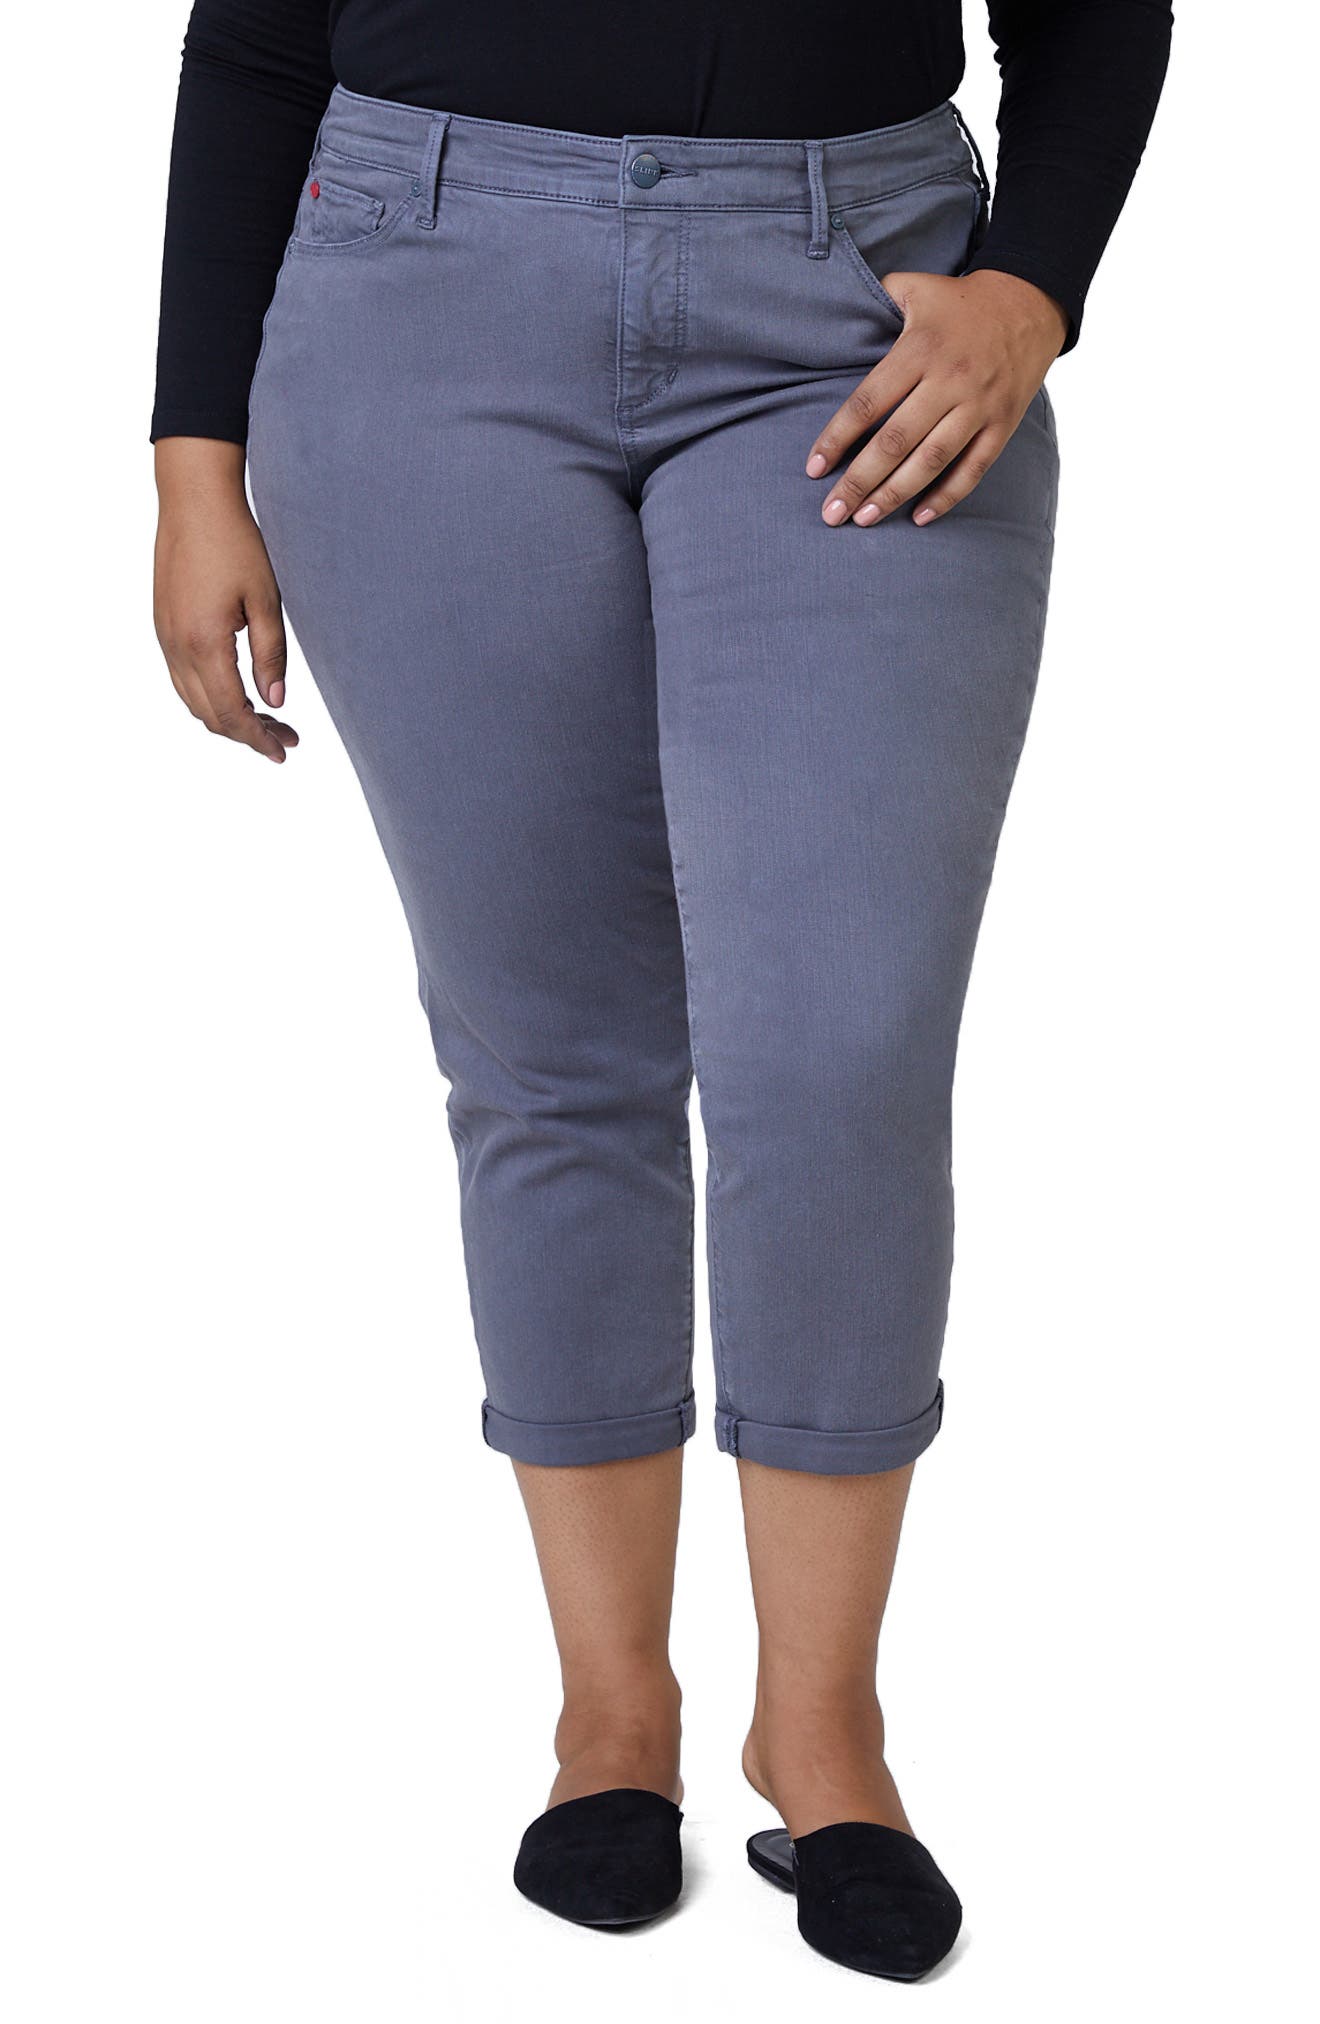 grey jeans womens plus size